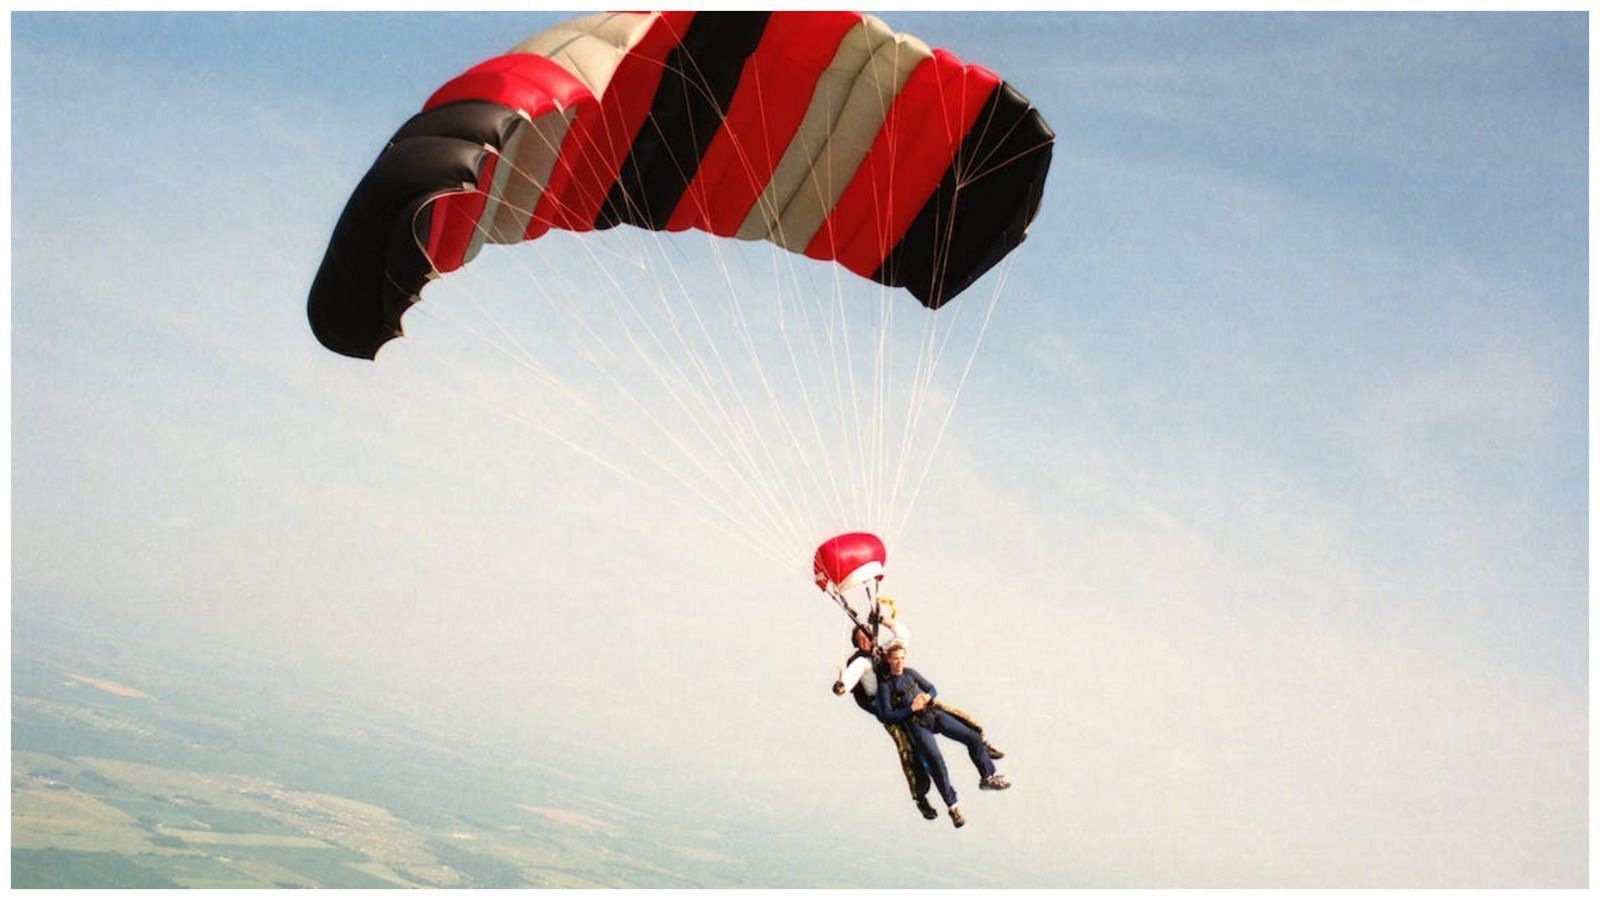 Terry Gardner lost his life while skydiving (Image via Pexels)